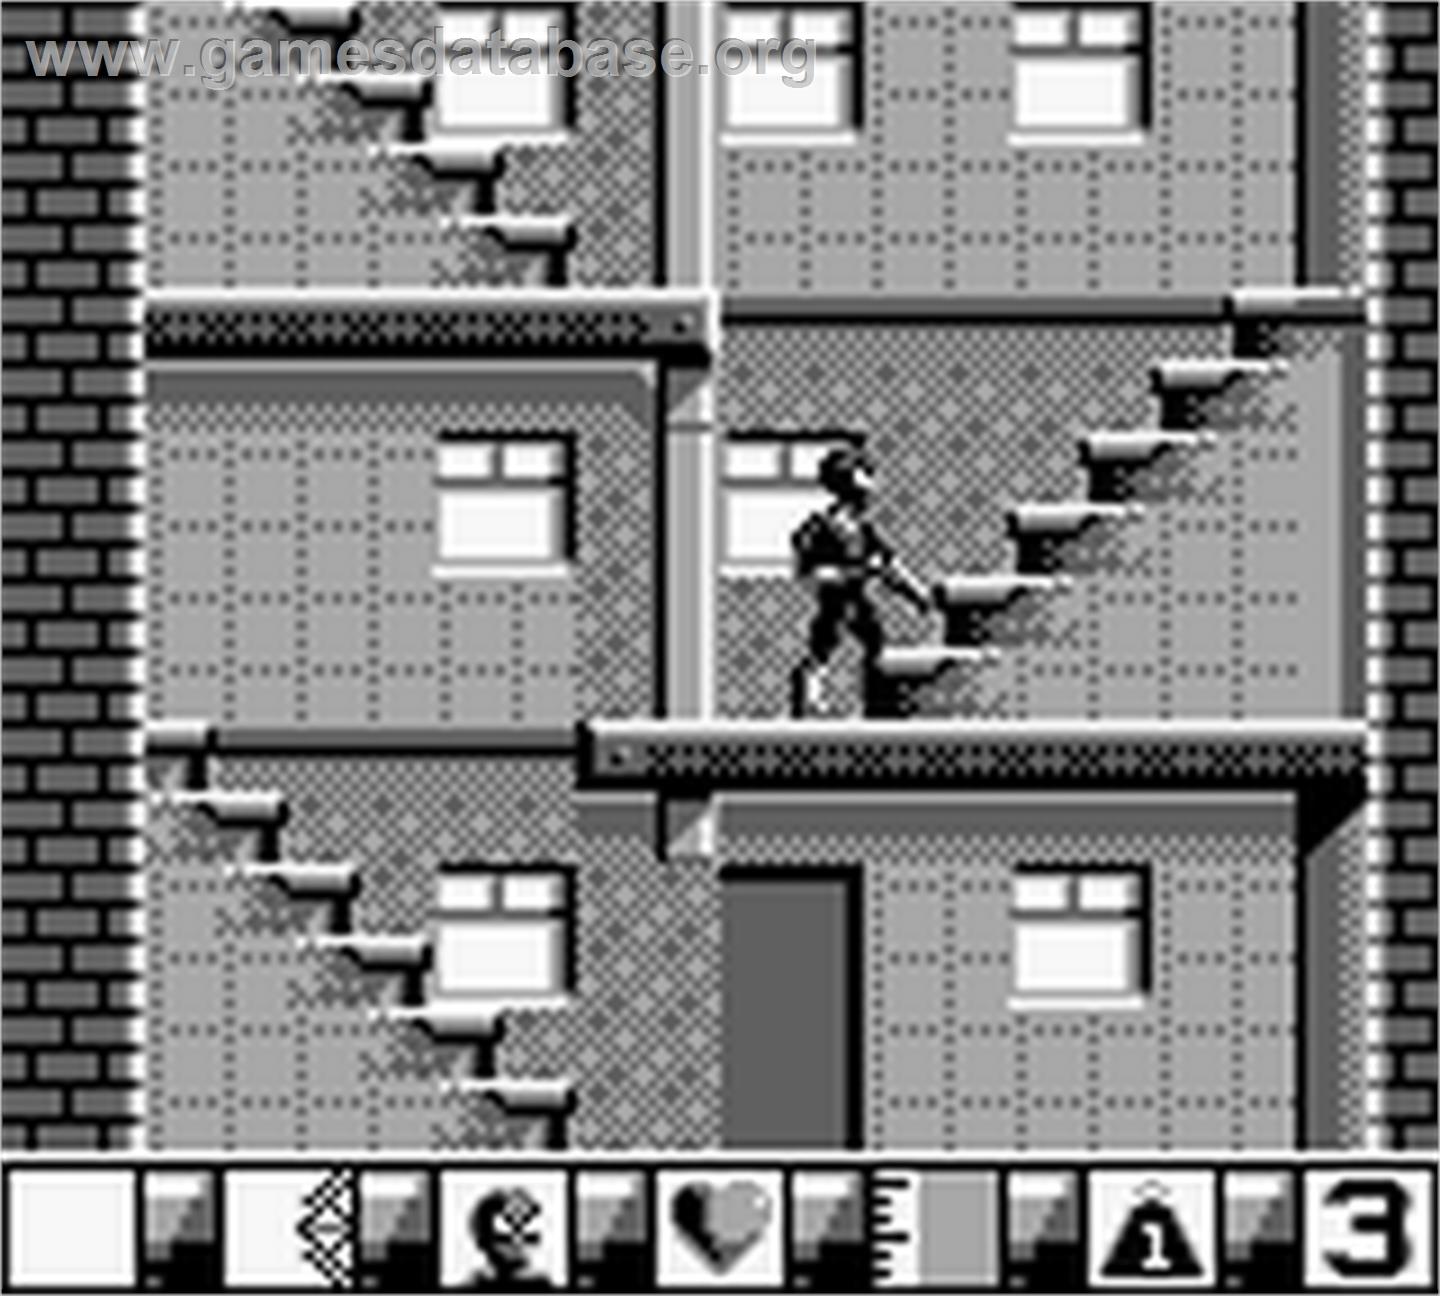 Amazing Spider-Man 2 - Nintendo Game Boy - Artwork - In Game